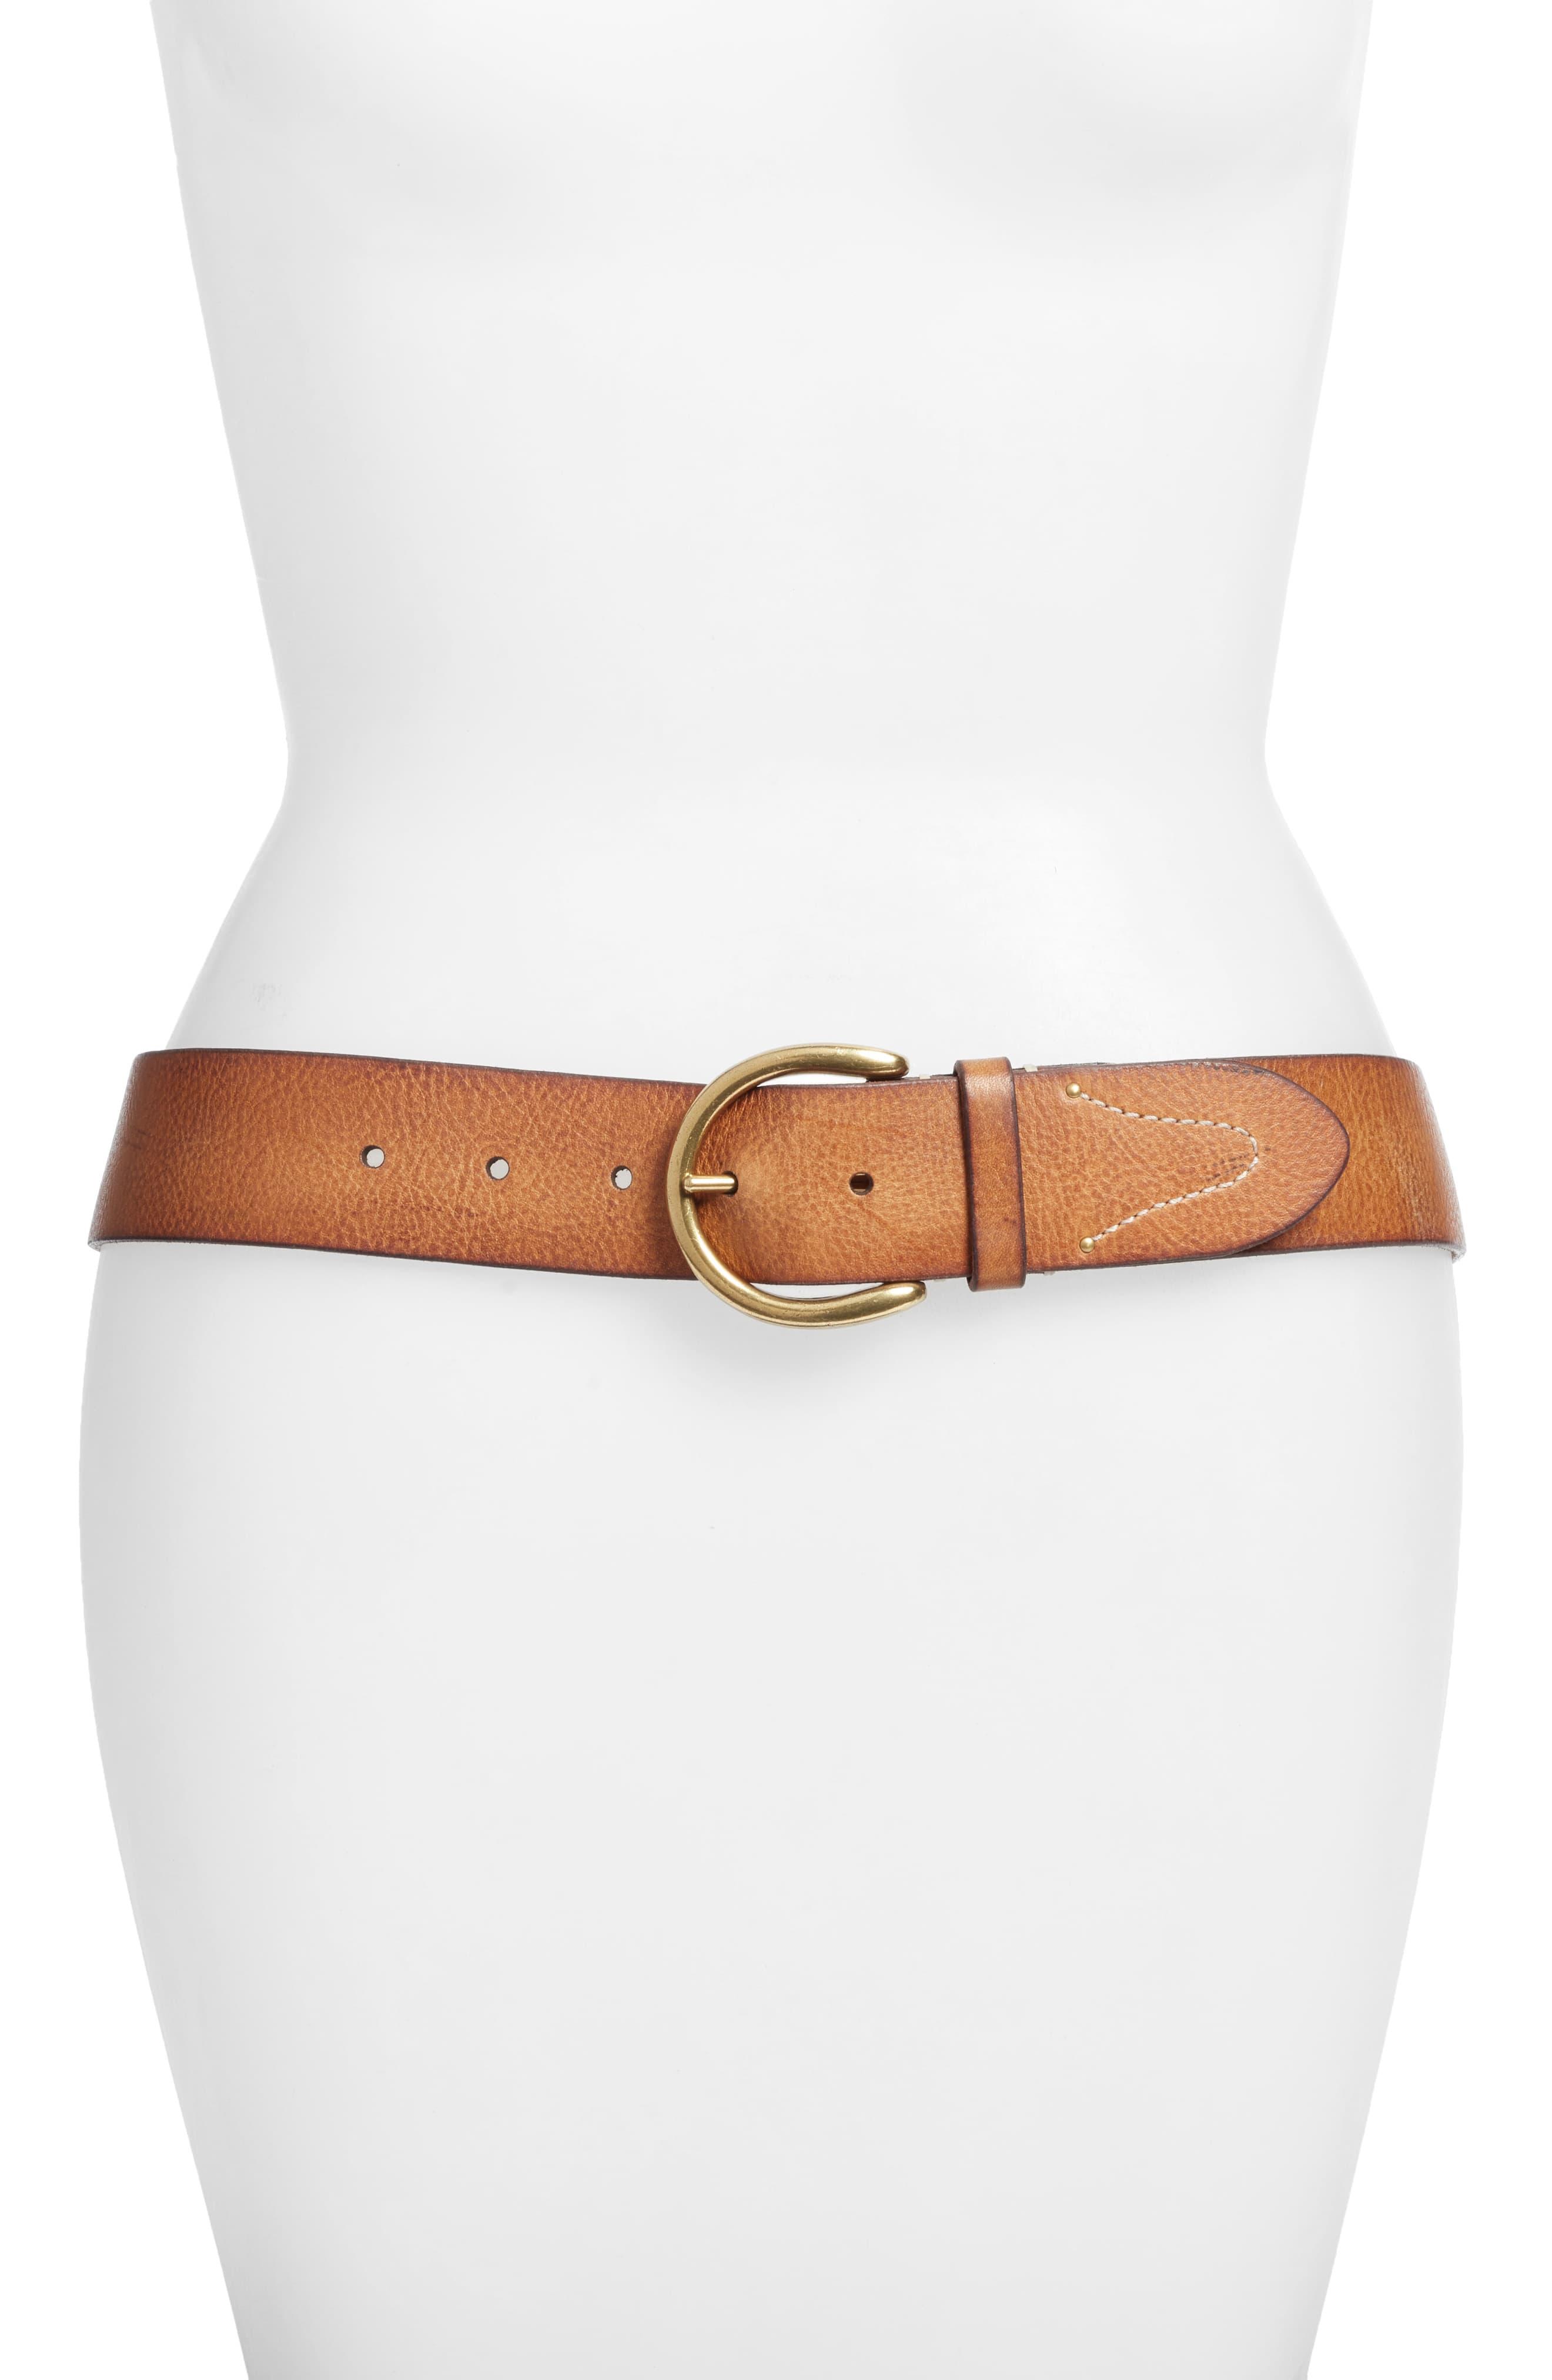 Frye Campus Leather Belt in Tan (Brown) - Lyst